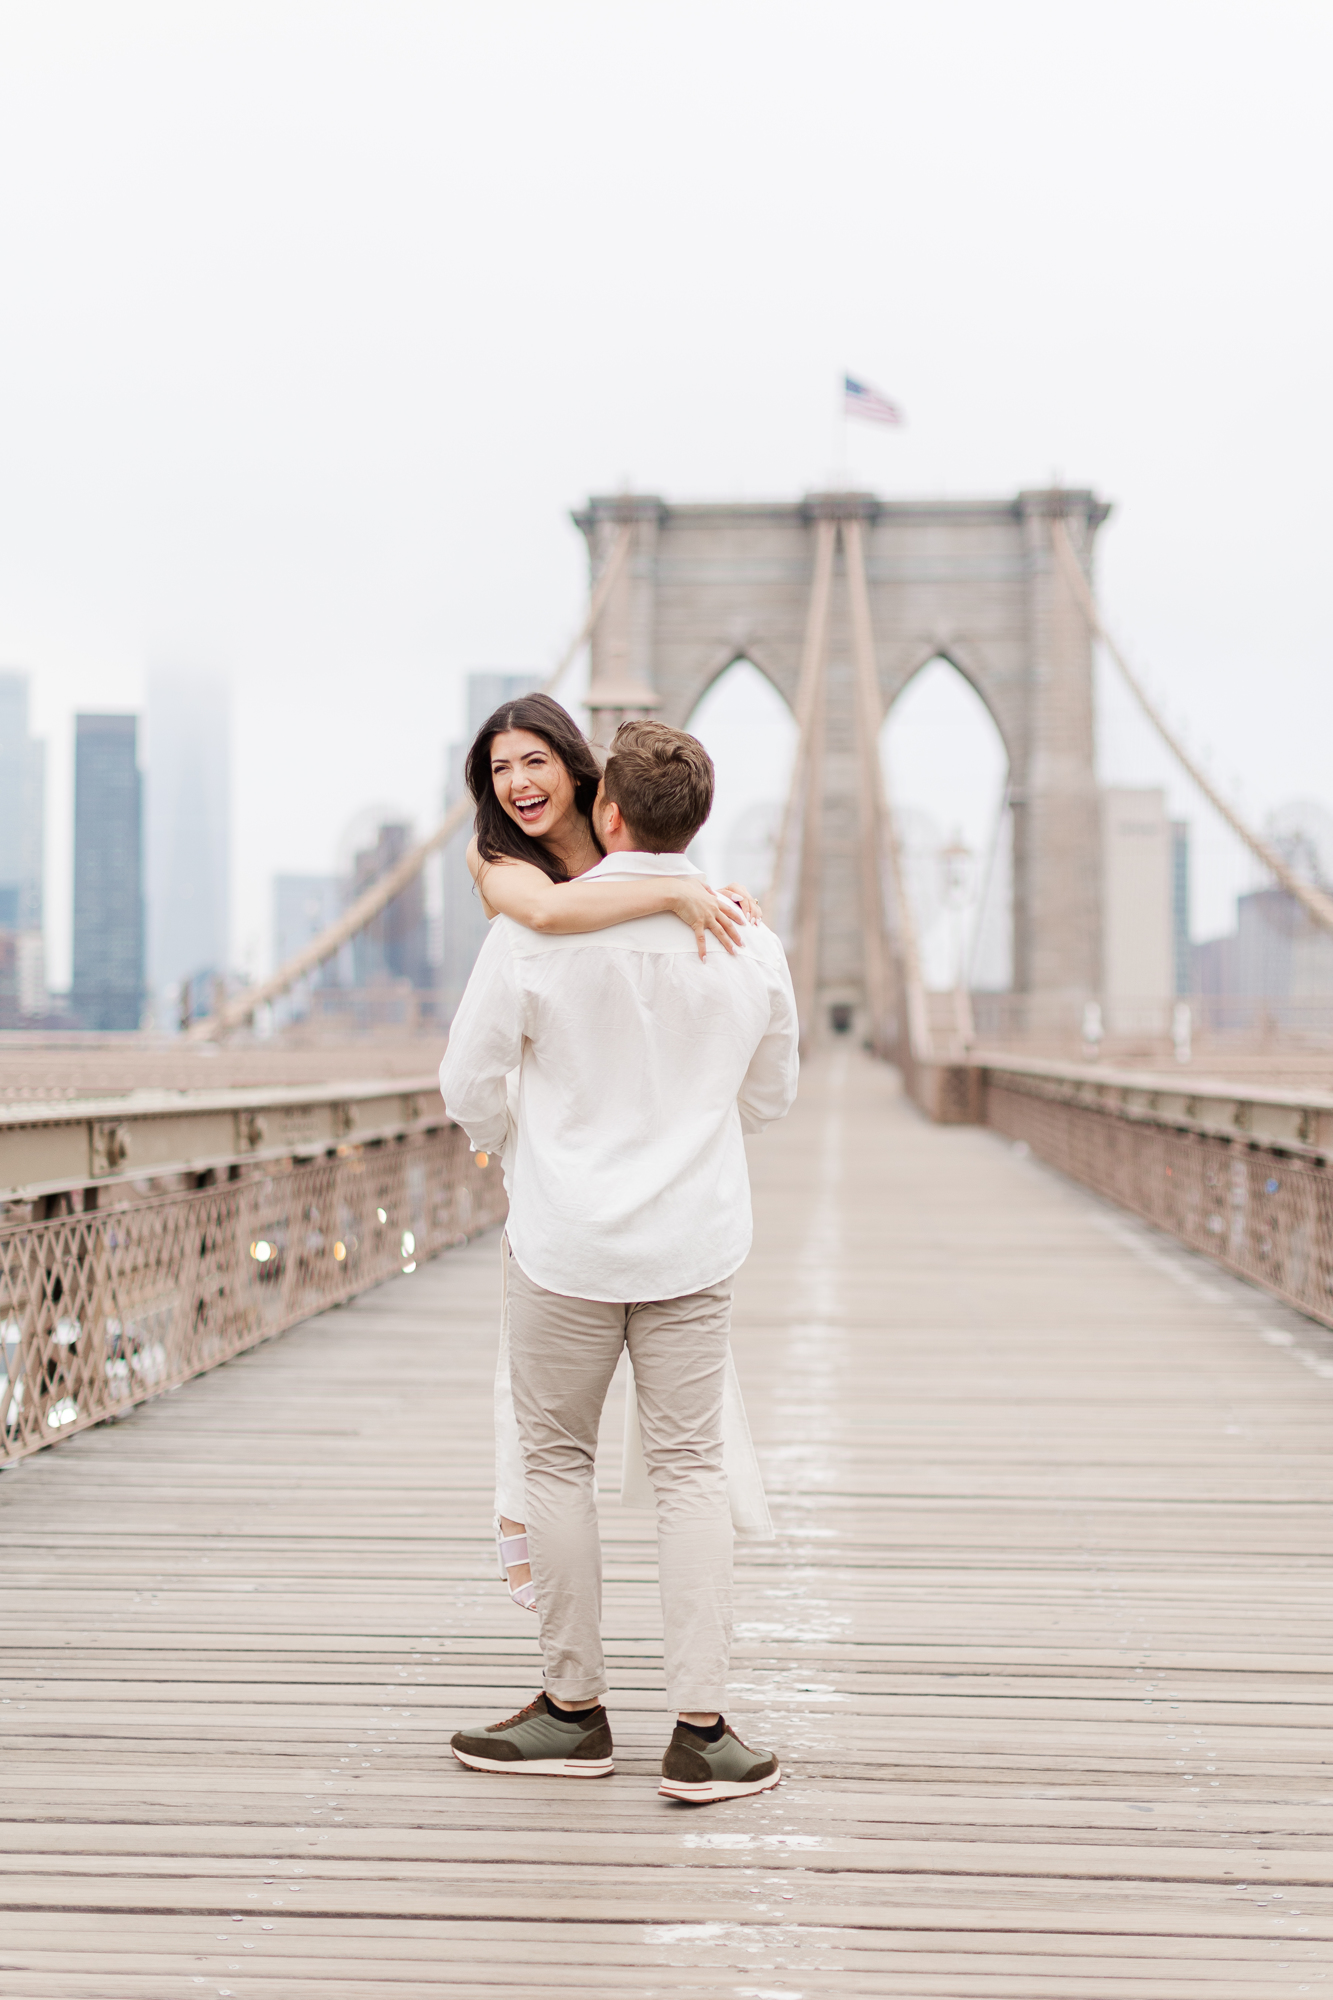 Playful Engagement Photography on the Brooklyn Bridge